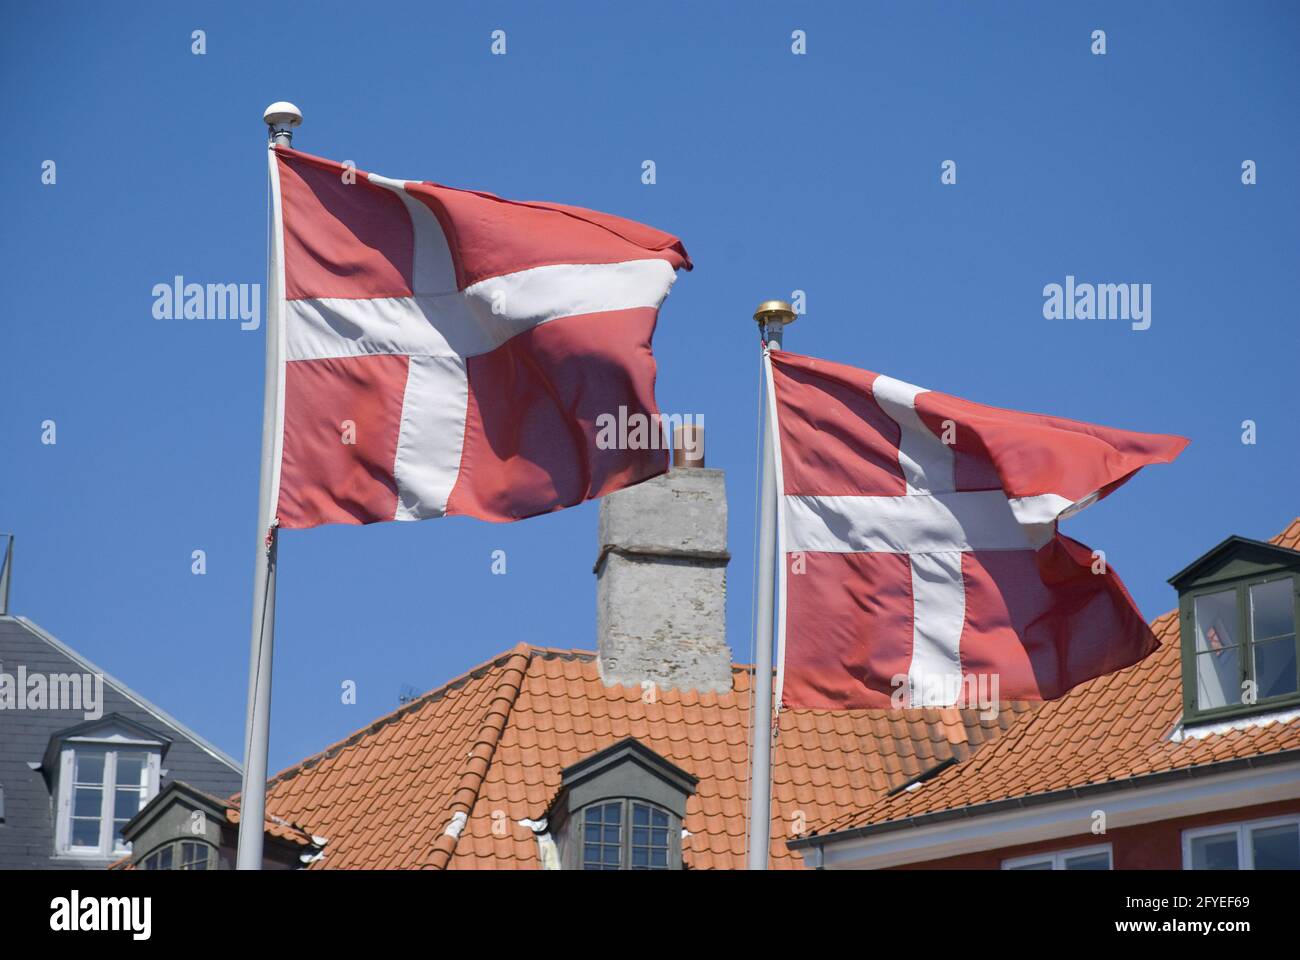 COPENH, DENMARK - Jun 13, 2013: Patriotic Denmark: Danish flag on pole waving in wind Stock Photo